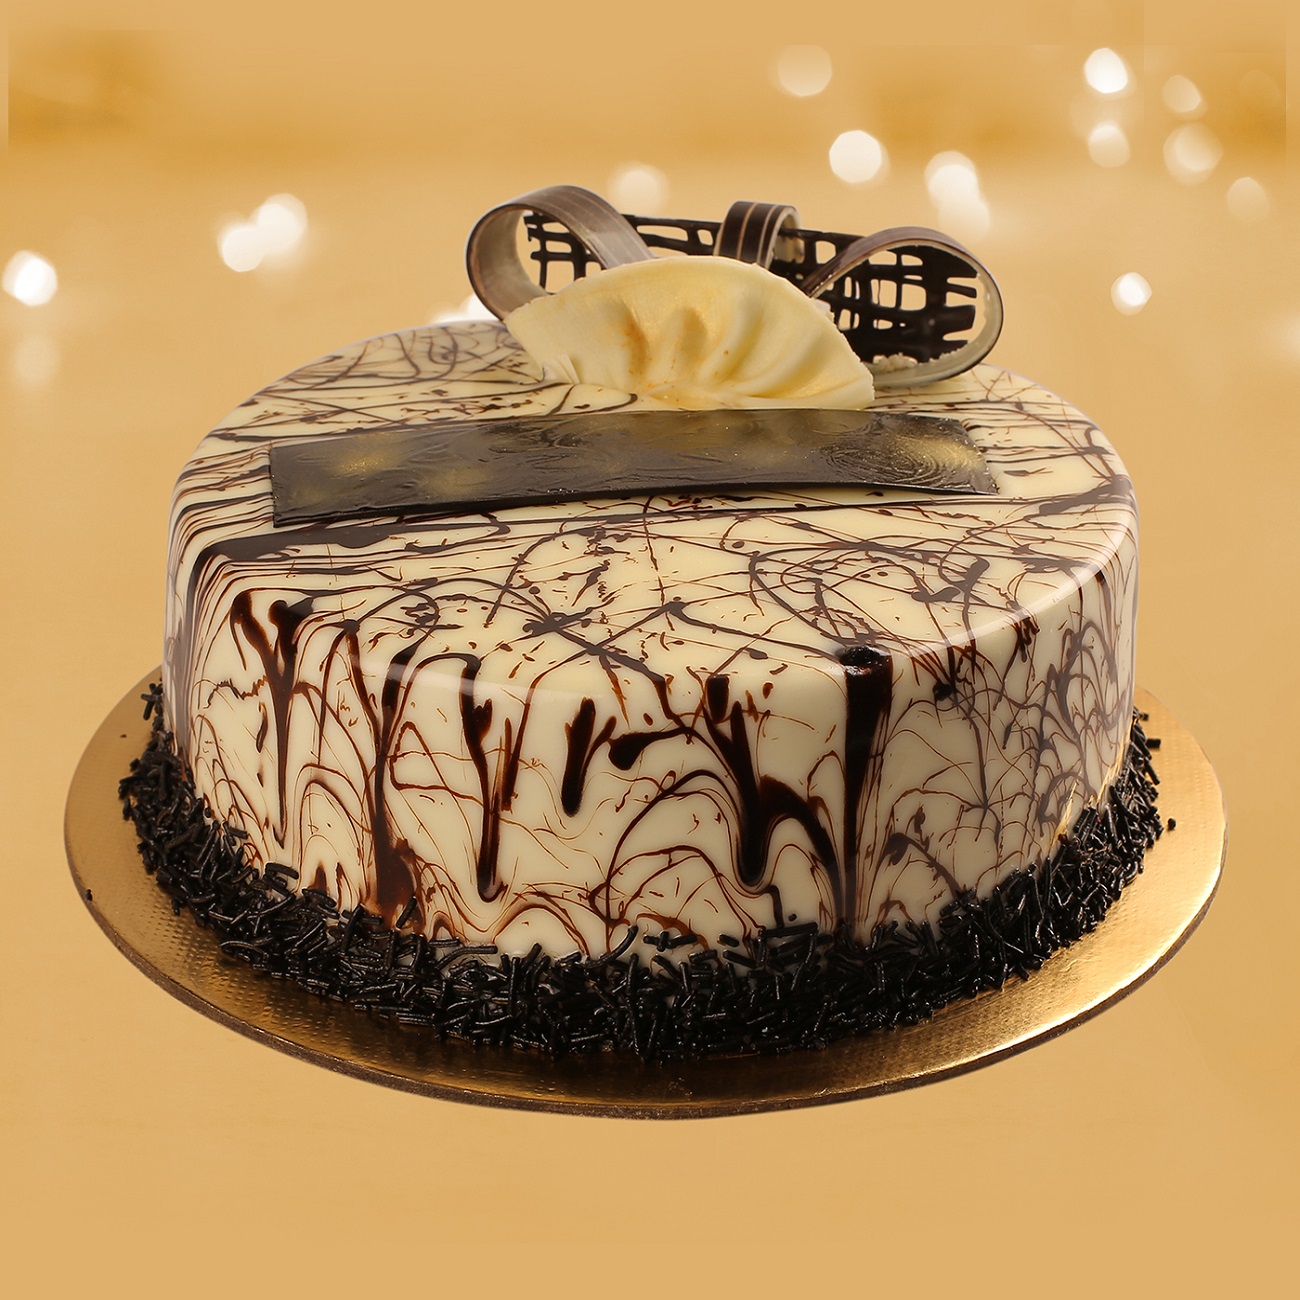 Chocolate Cake, Packaging Type: Box